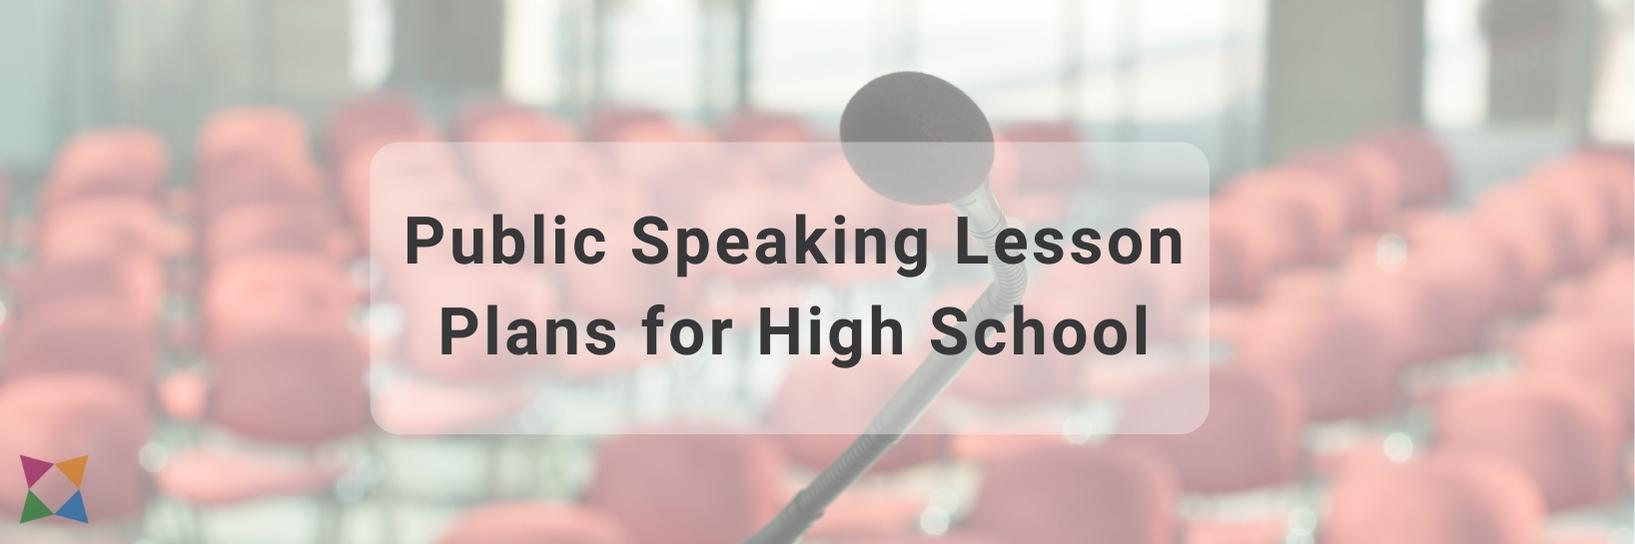 4 Best Public Speaking Lesson Plans for High School